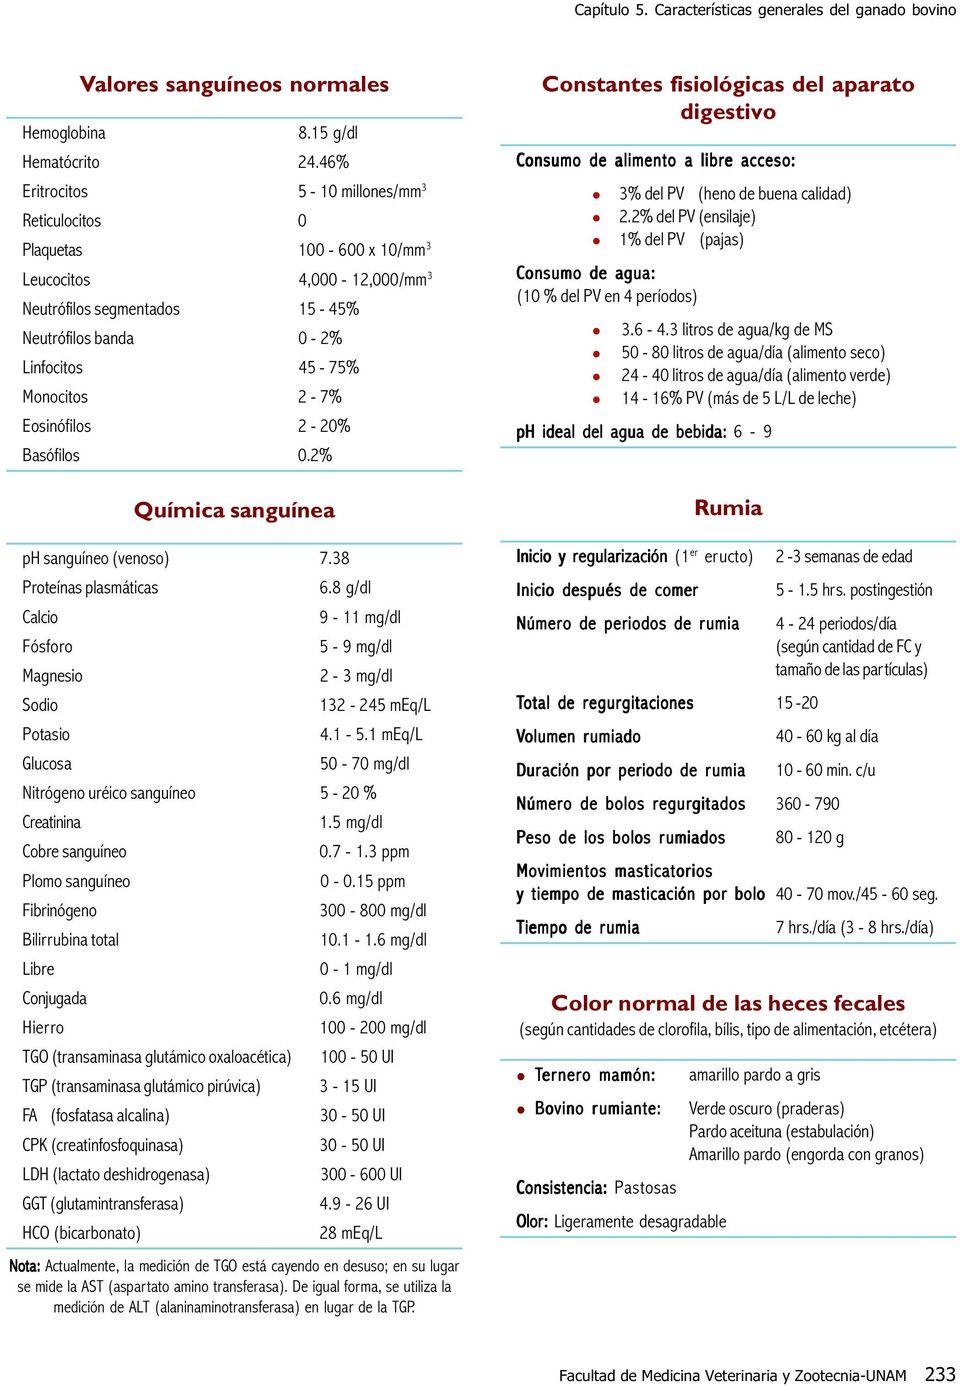 Eosinófilos 2-20% Basófilos 0.2% Química sanguínea ph sanguíneo (venoso) 7.38 Proteínas plasmáticas 6.8 g/dl Calcio 9-11 mg/dl Fósforo 5-9 mg/dl Magnesio 2-3 mg/dl Sodio 132-245 meq/l Potasio 4.1-5.